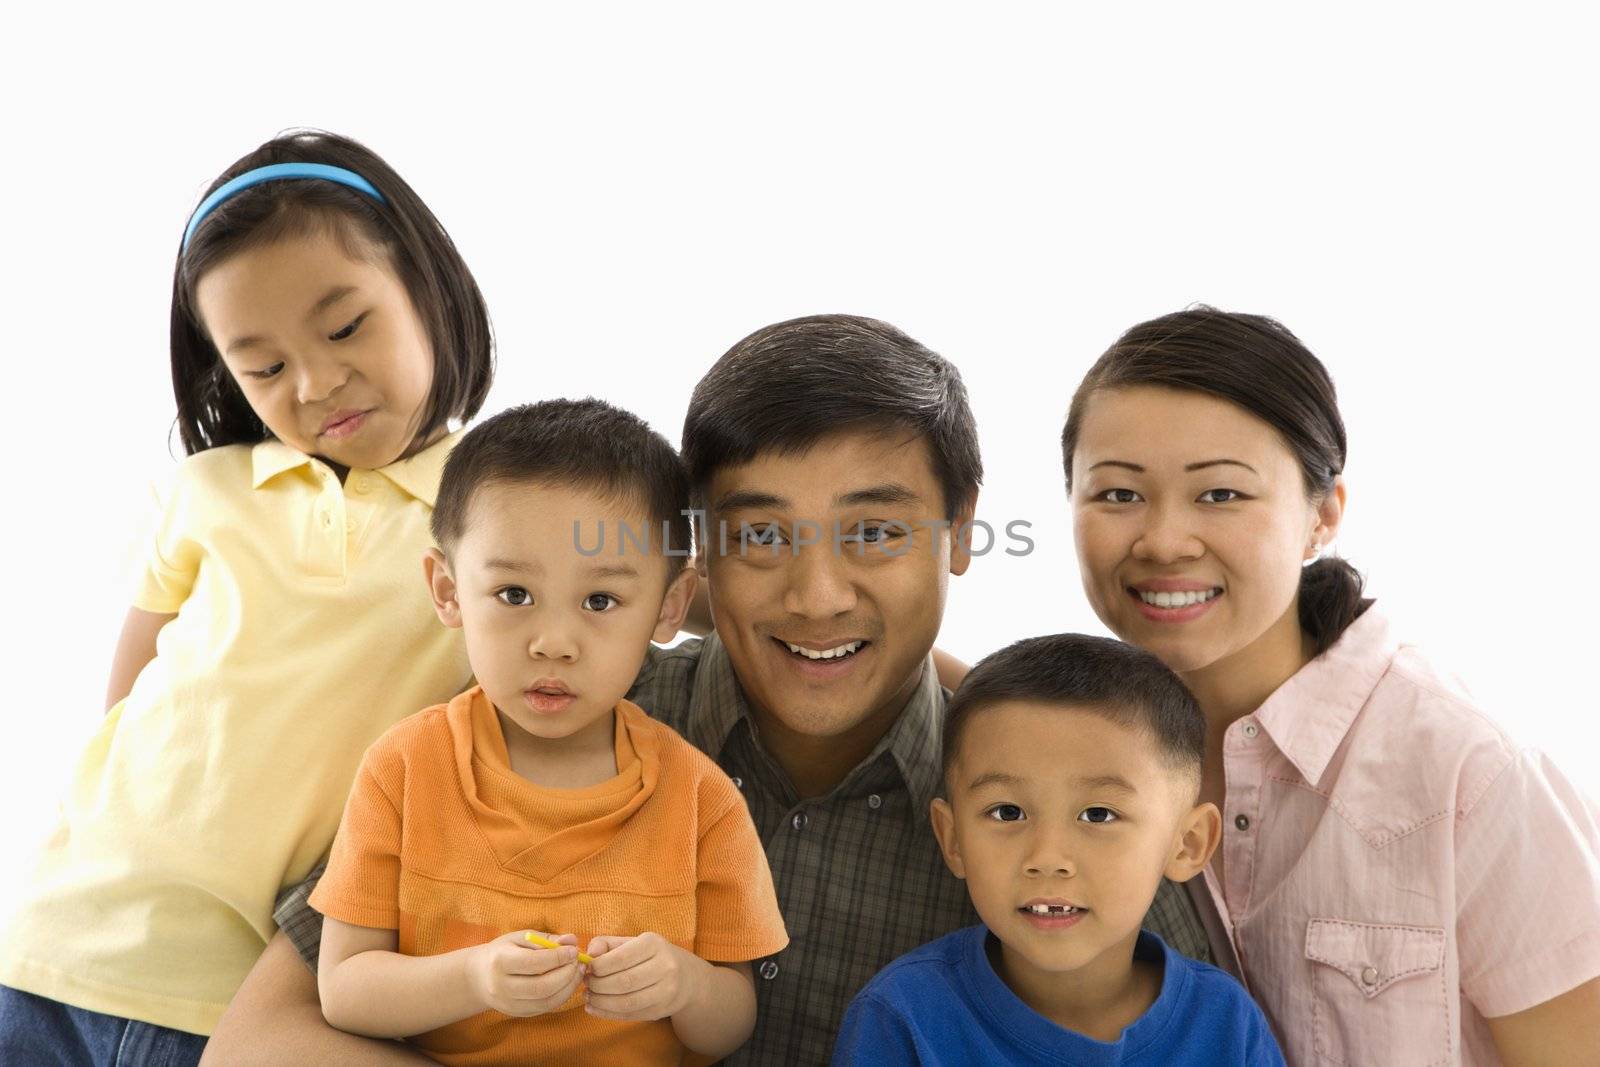 Asian family portrait against white background.